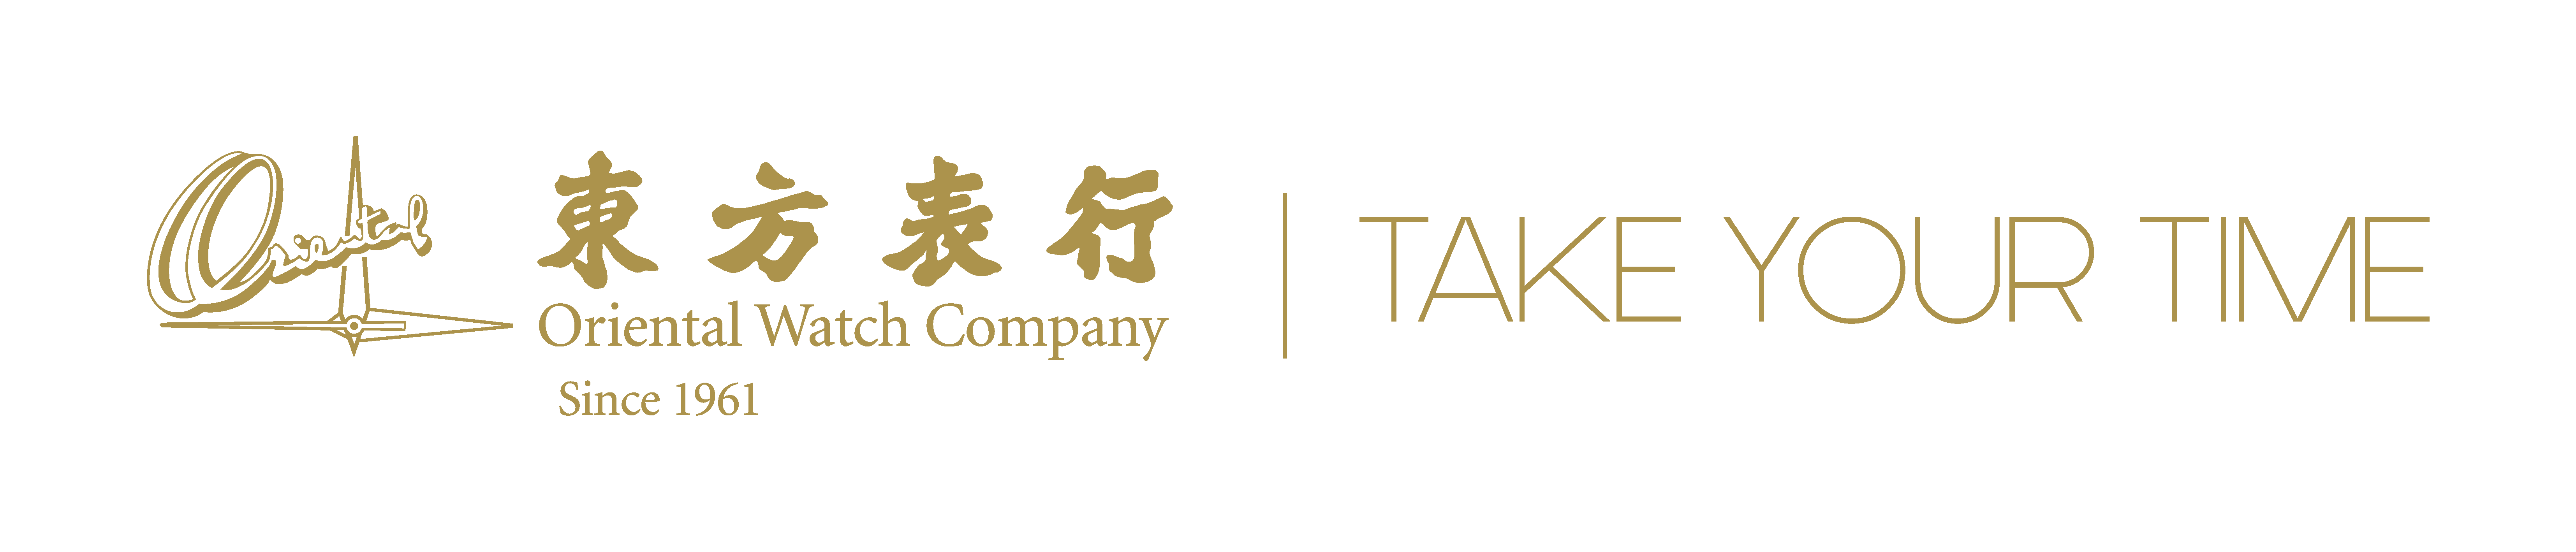 Take You Time - Oriental Watch Company